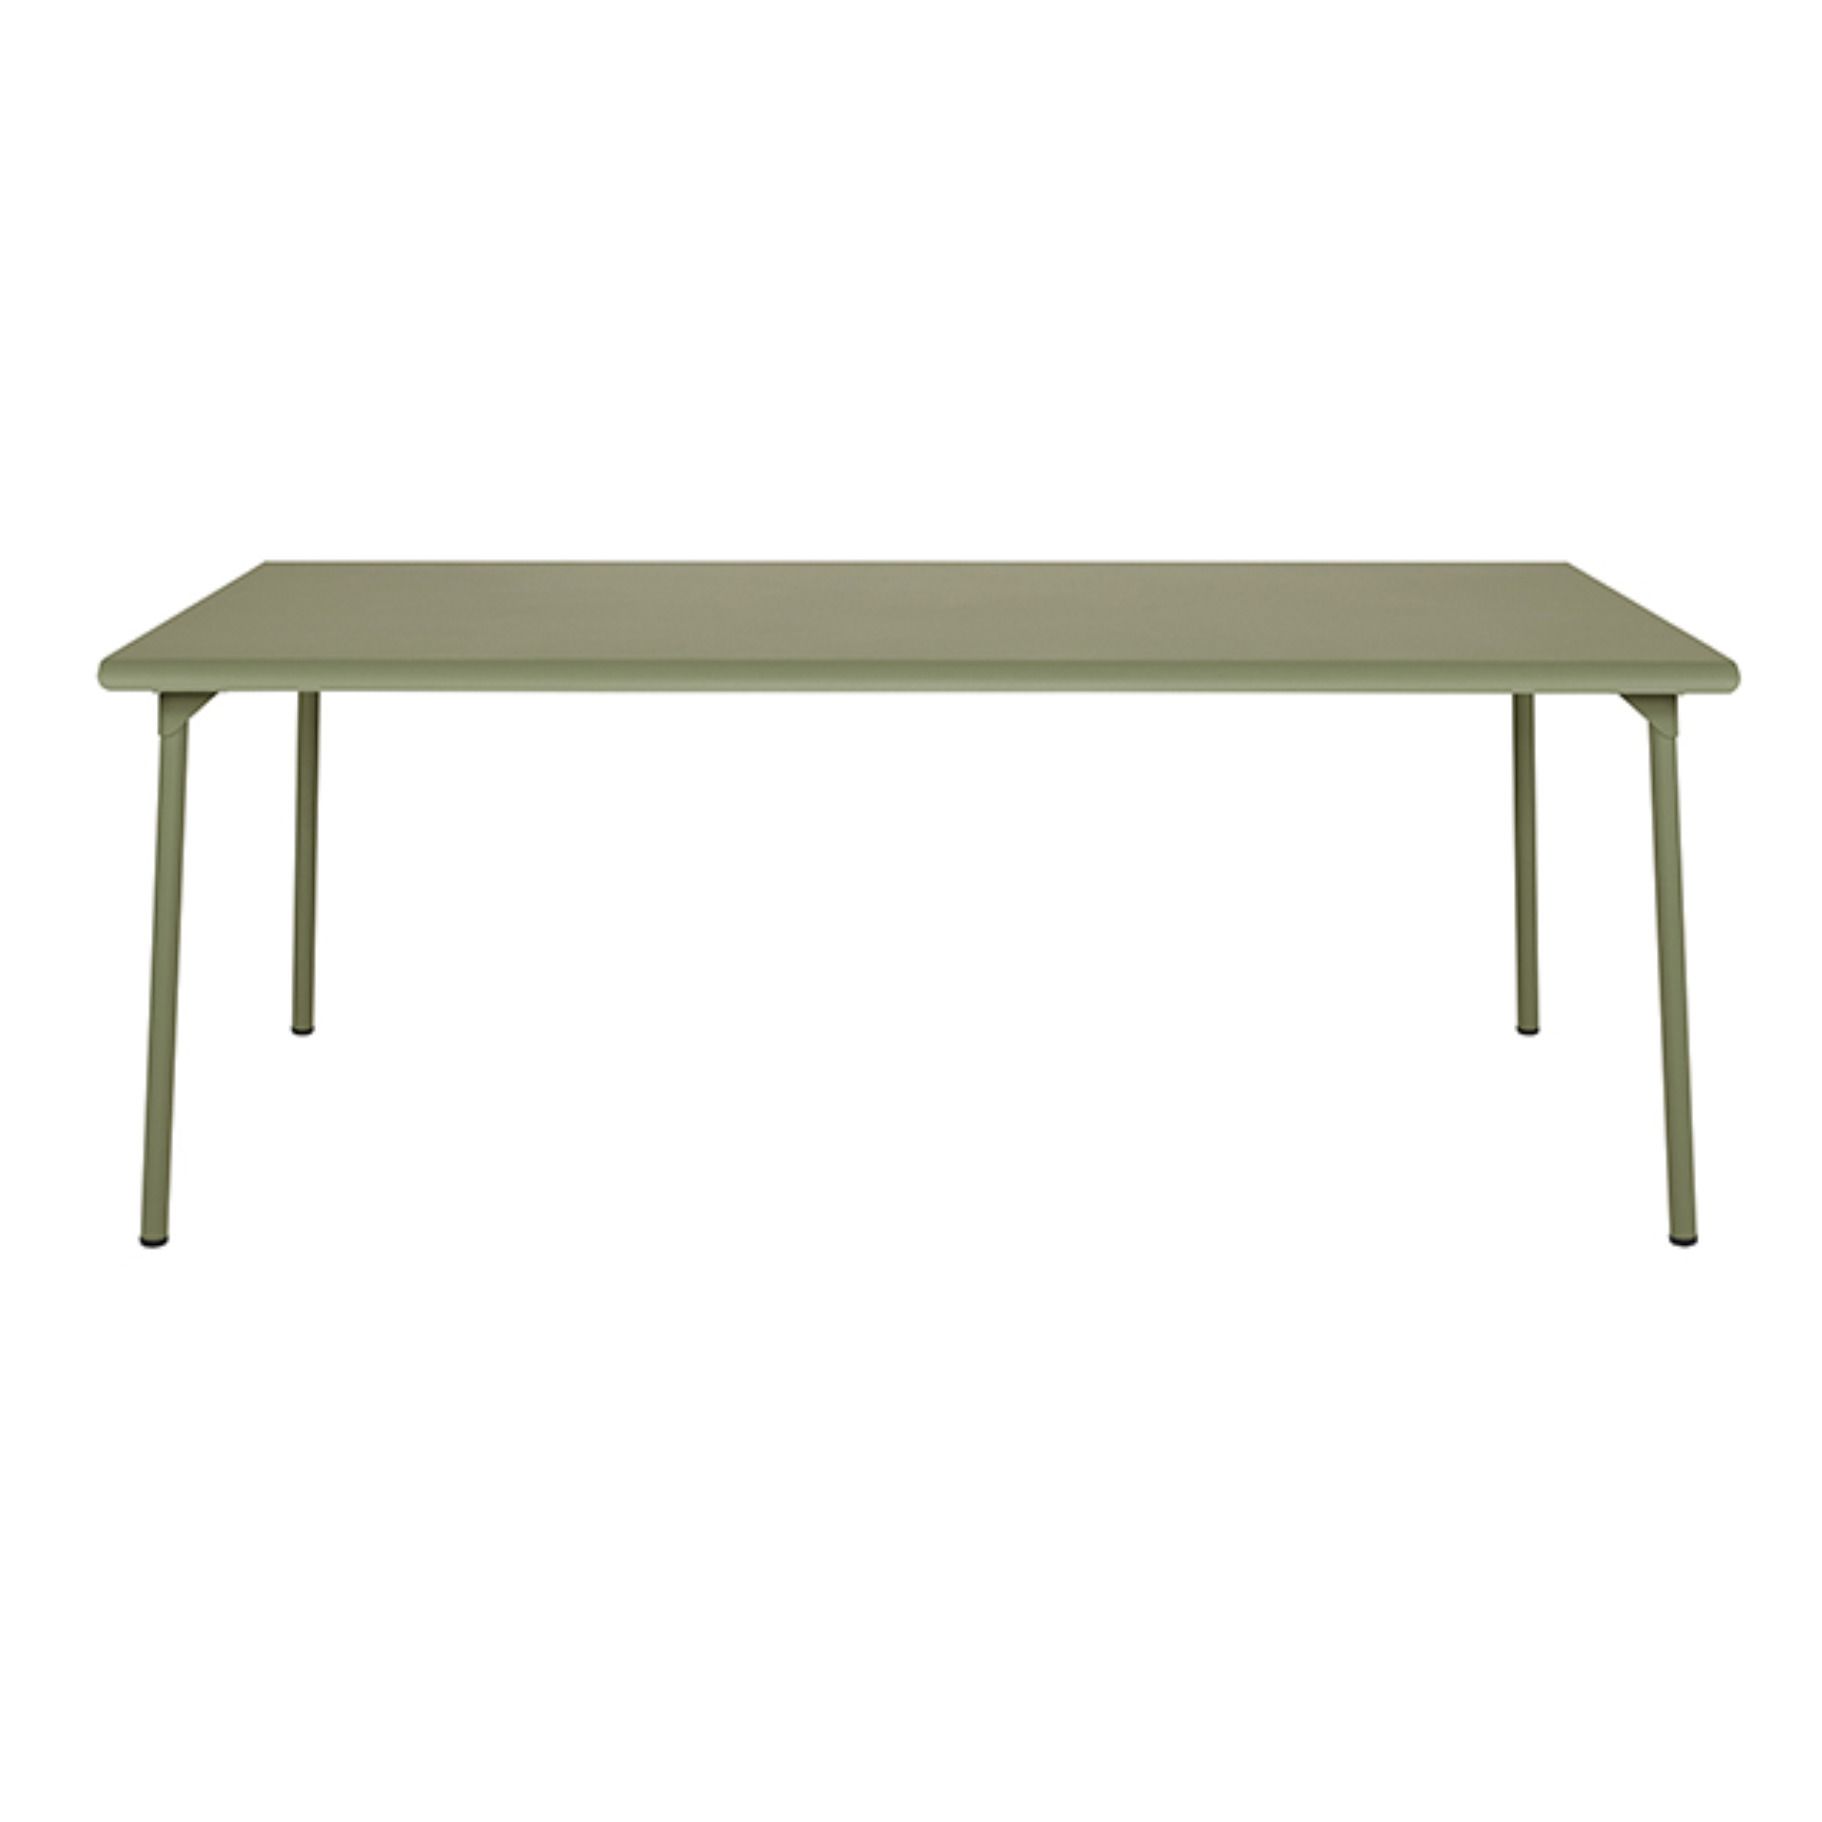 Tolix - Table outdoor Patio en inox - 240x100 cm - Olive